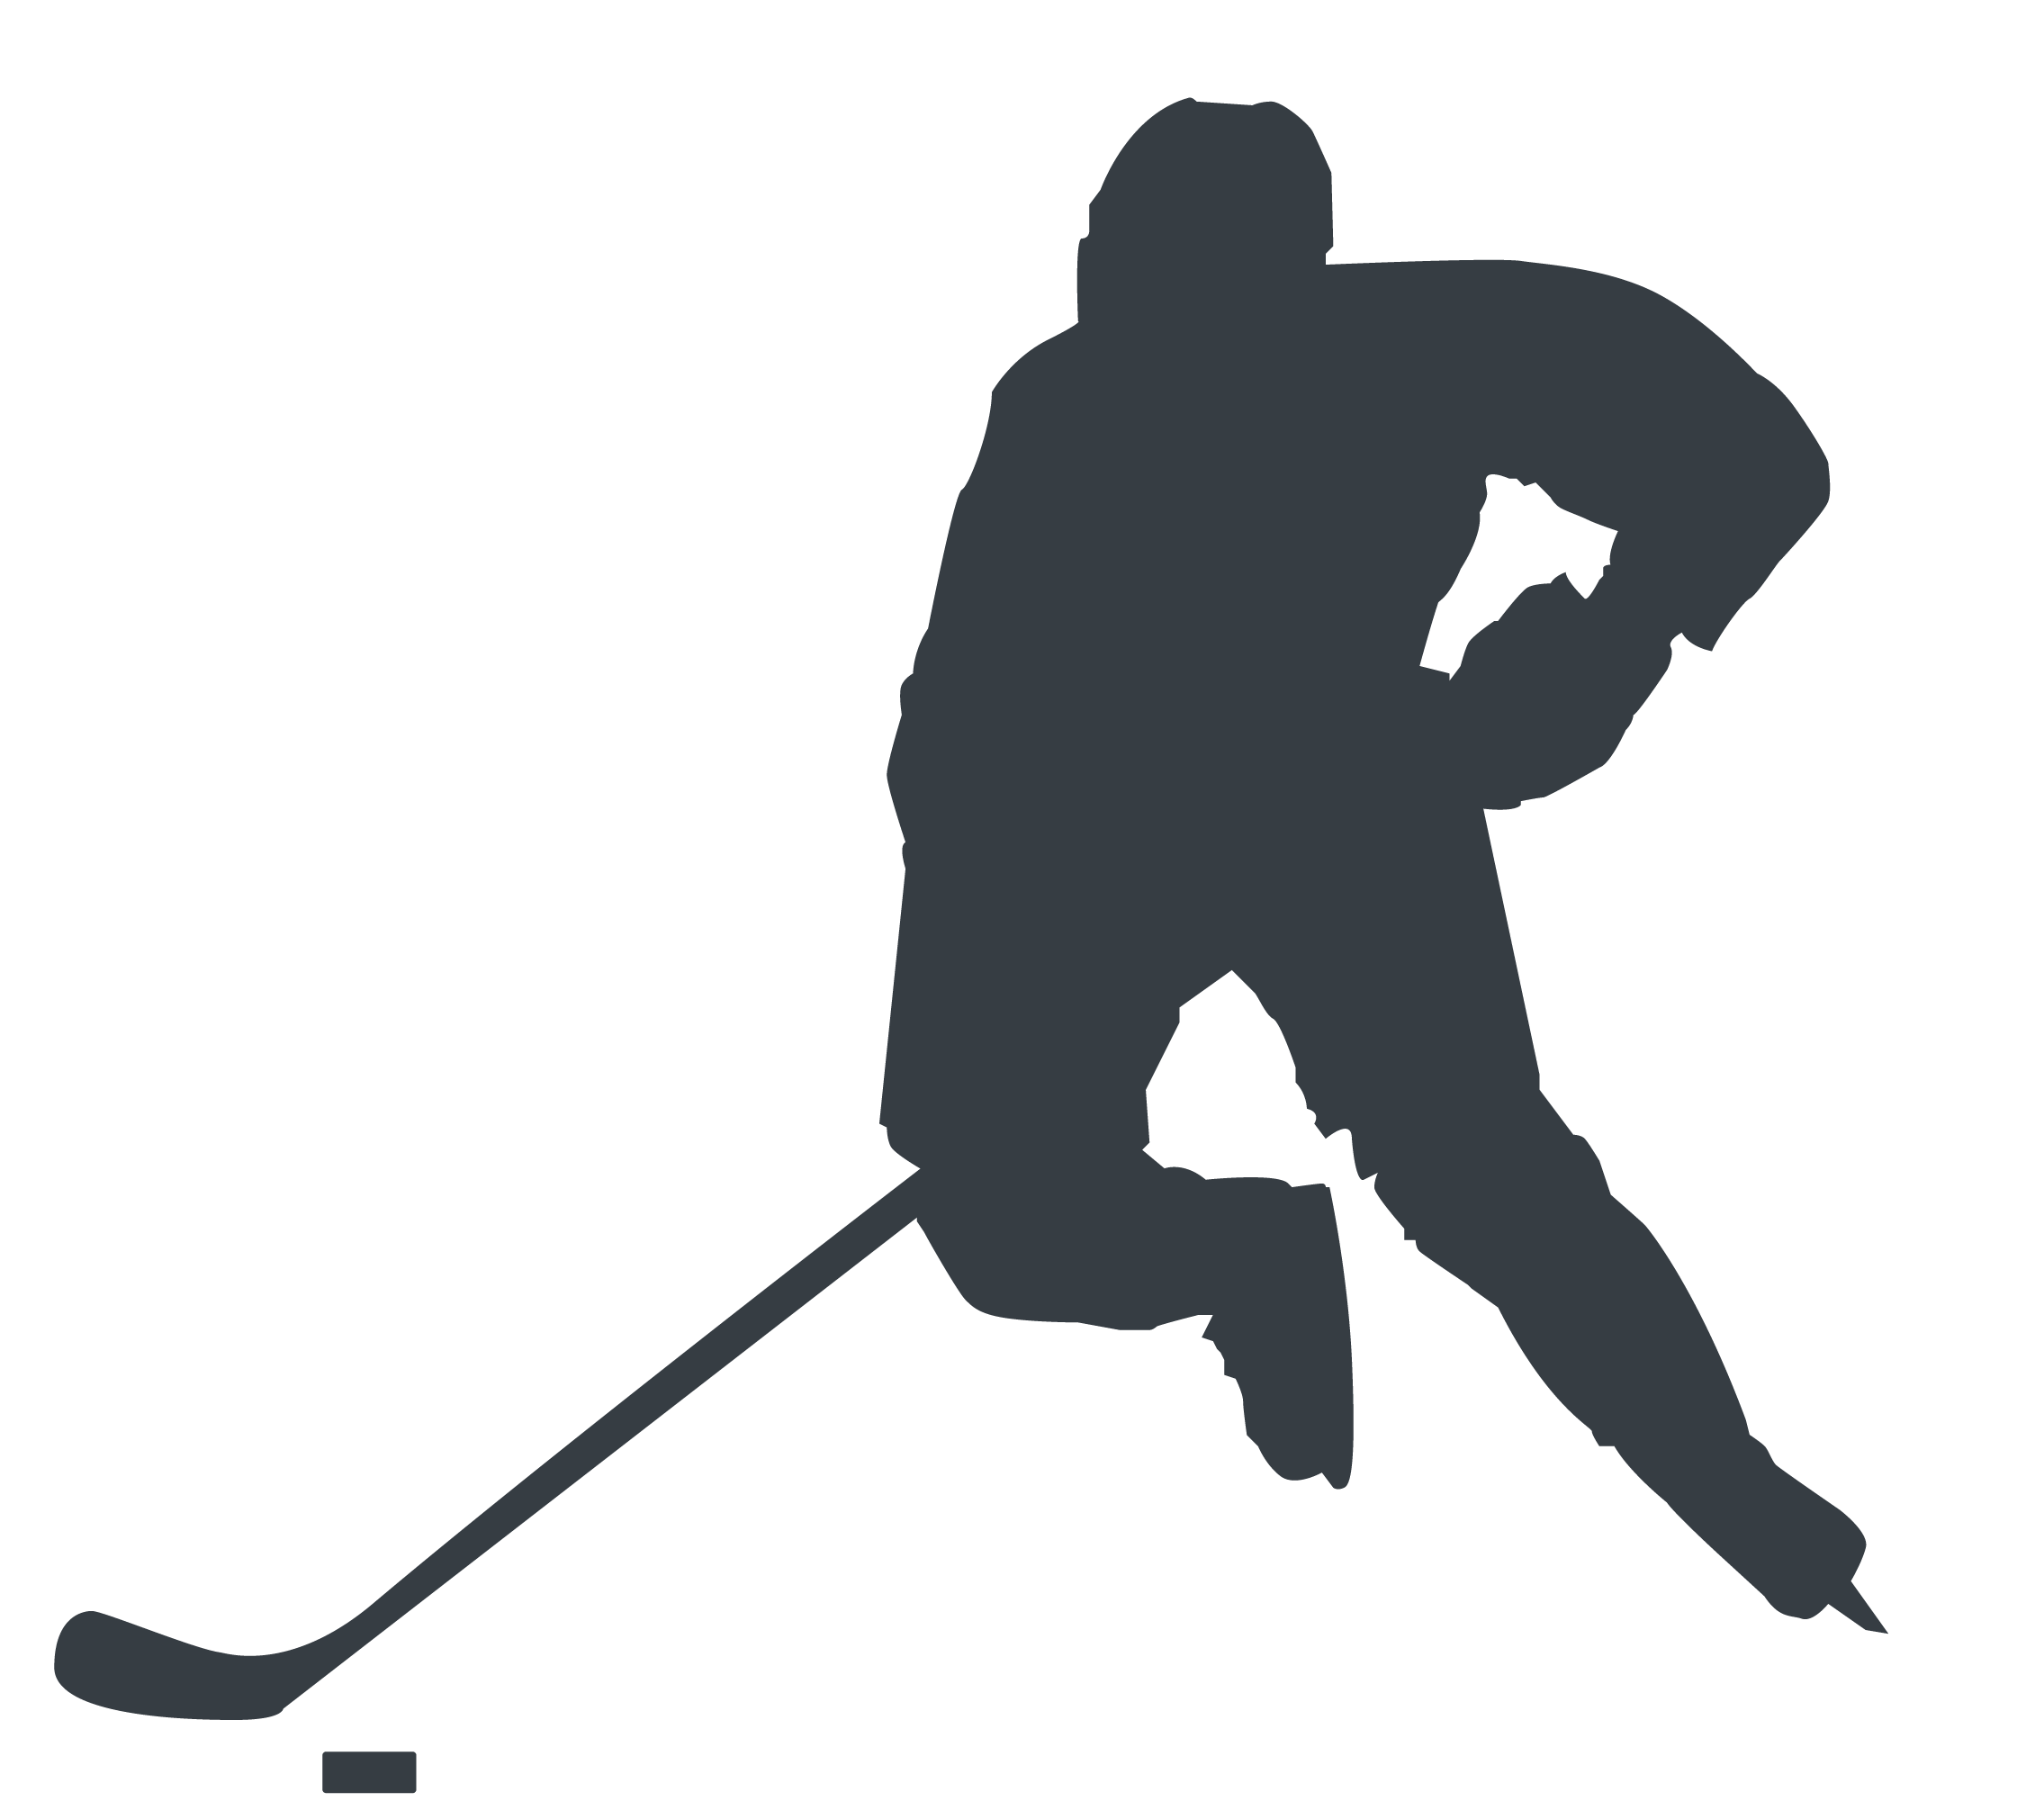 Ice Hockey Player Gear: Everything You Need To Play Ice Hockey